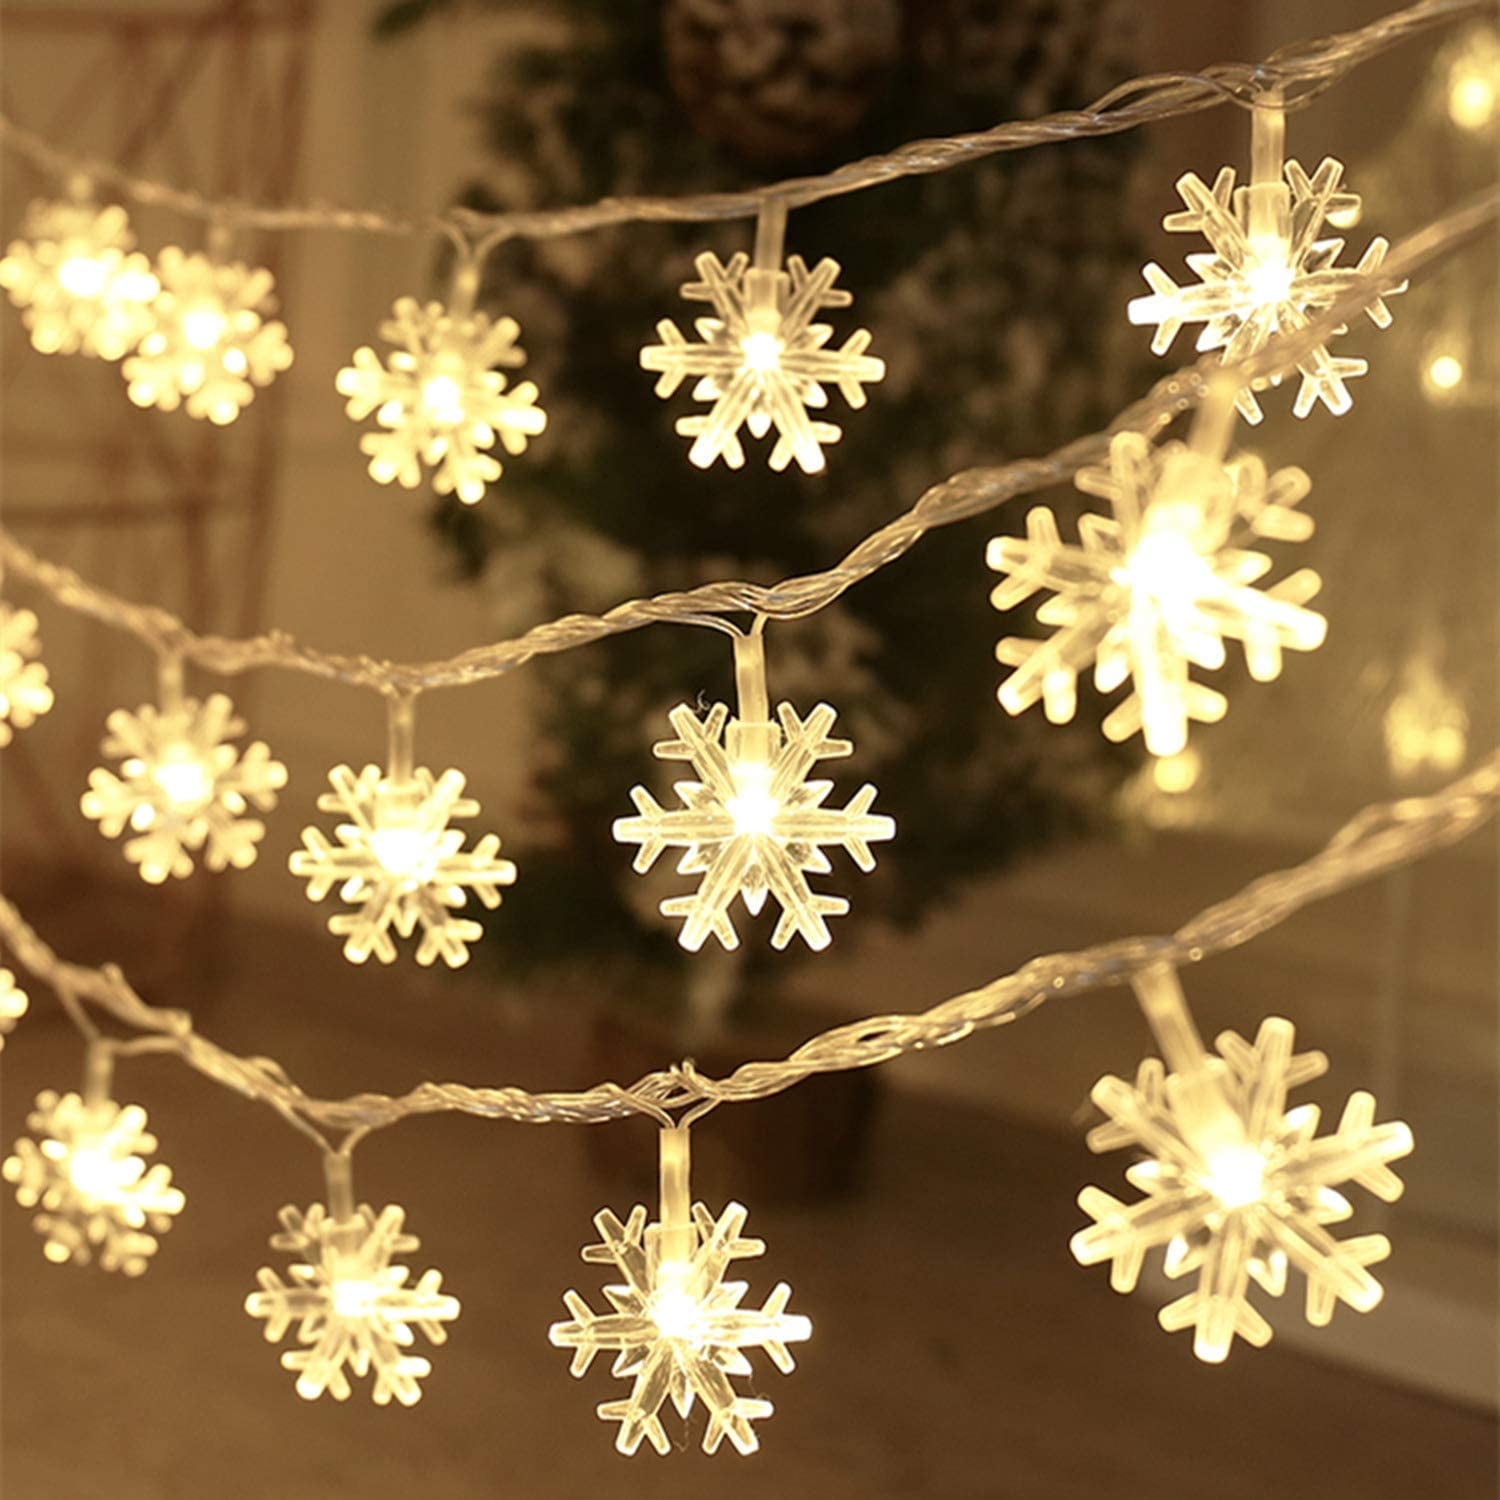 2M 20LED Snowflake Fairy String Light Wedding Garden Party Christmas Xmas Decor 